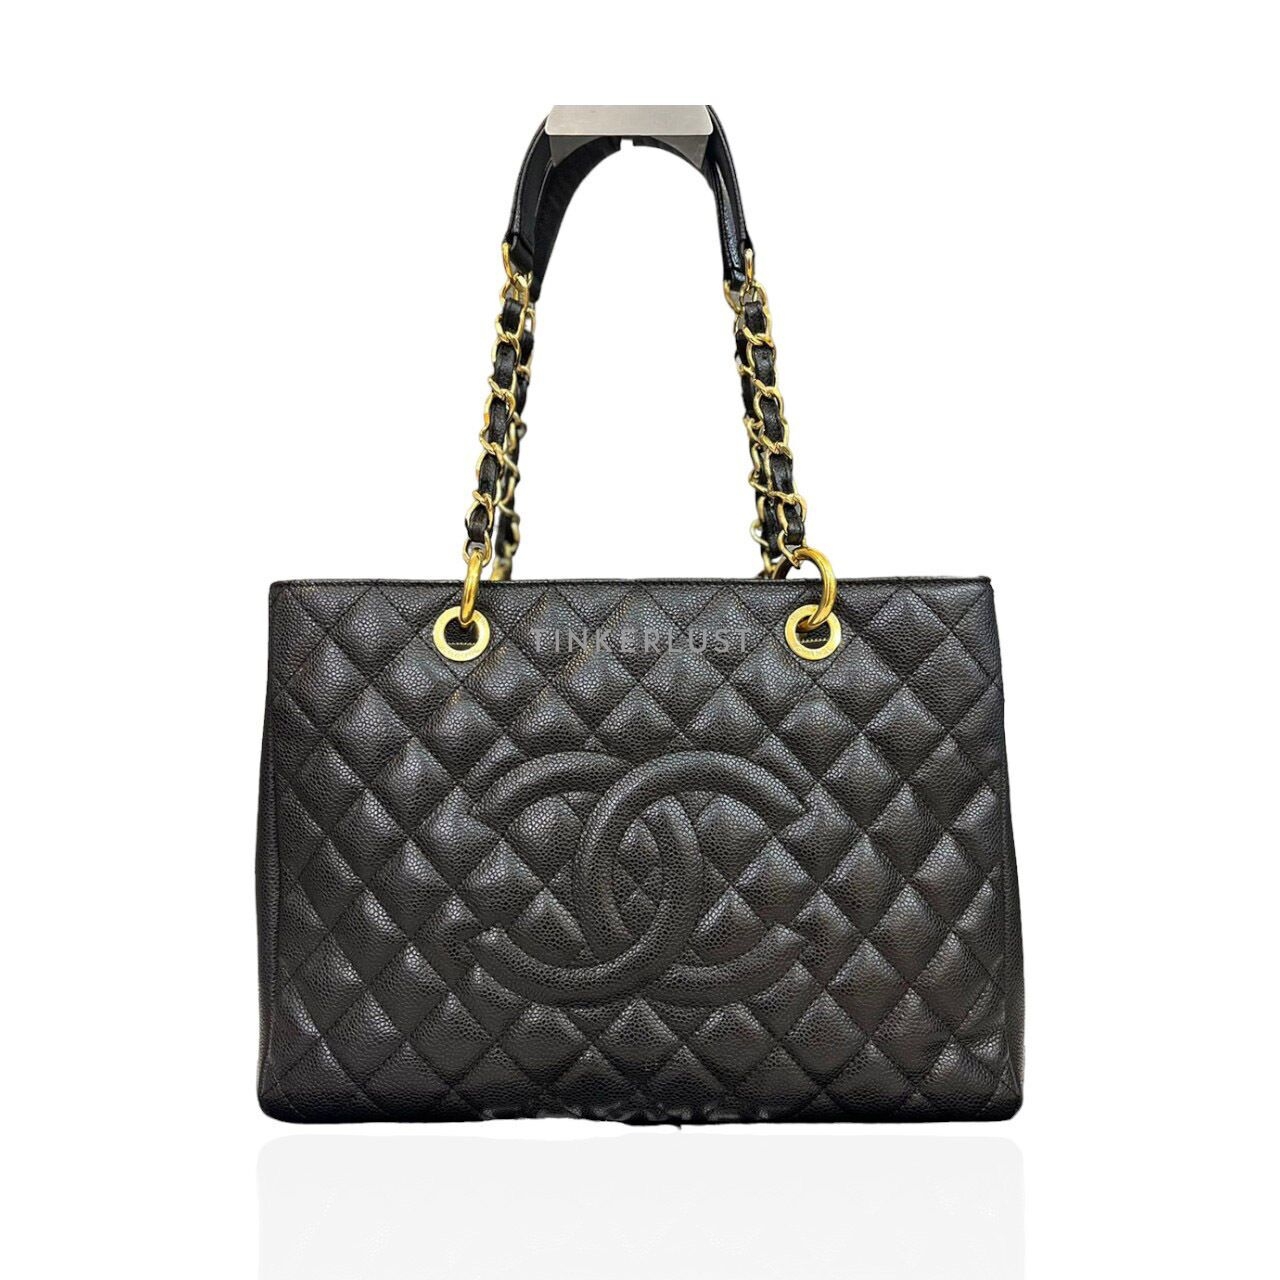 Chanel GST Black Caviar GHW #19 Tote Bag